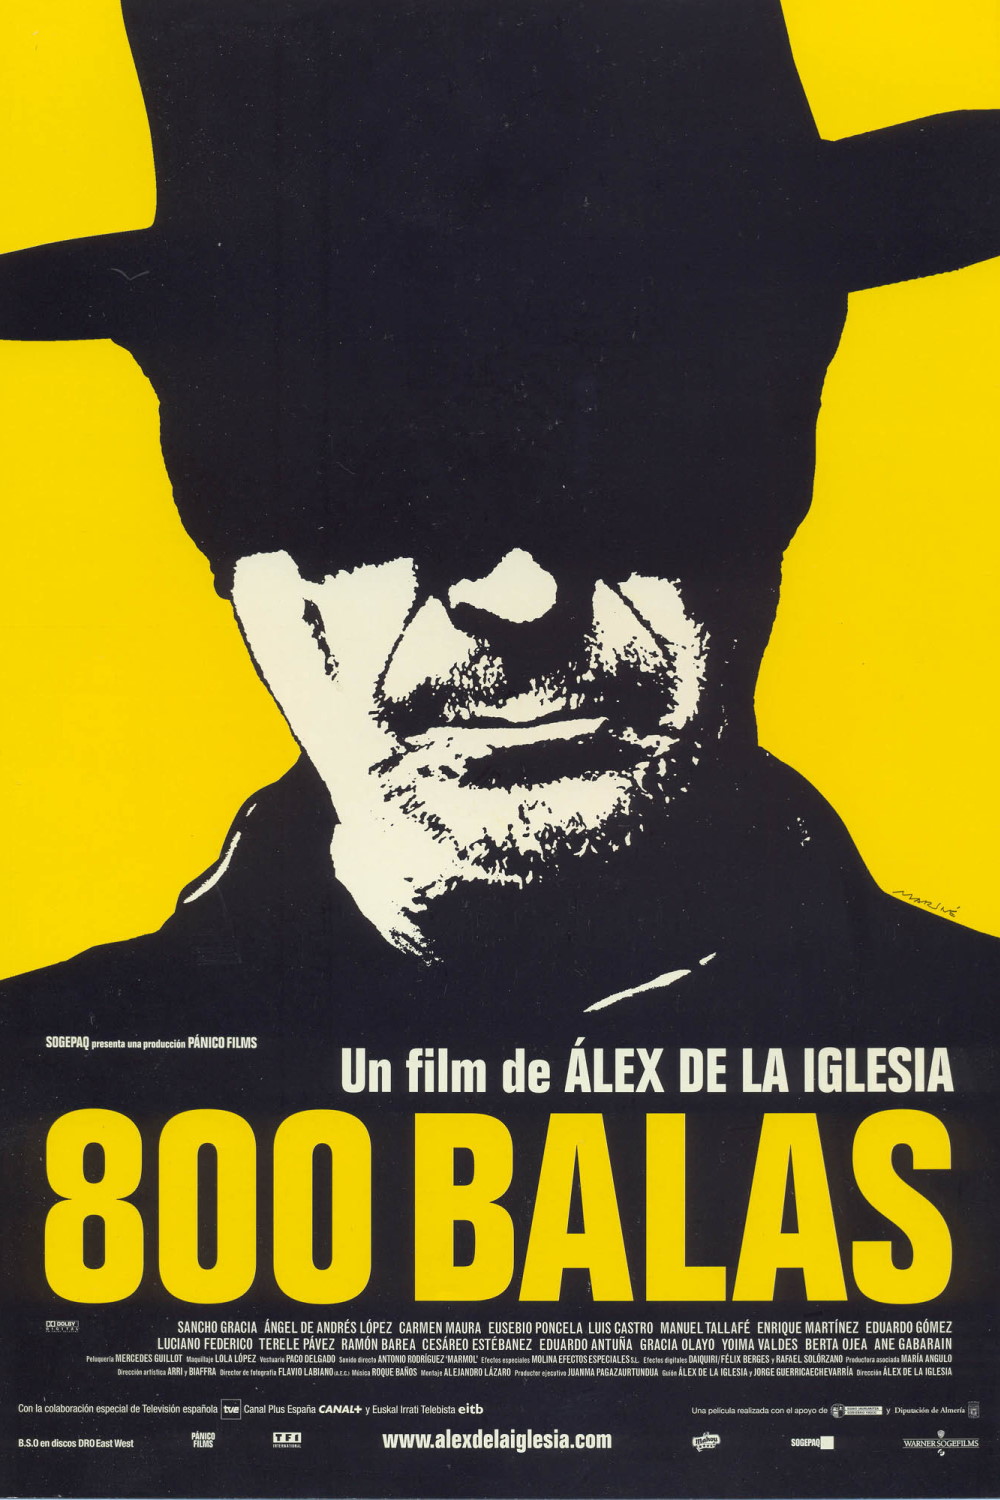 800 Bullets (2002) Poster